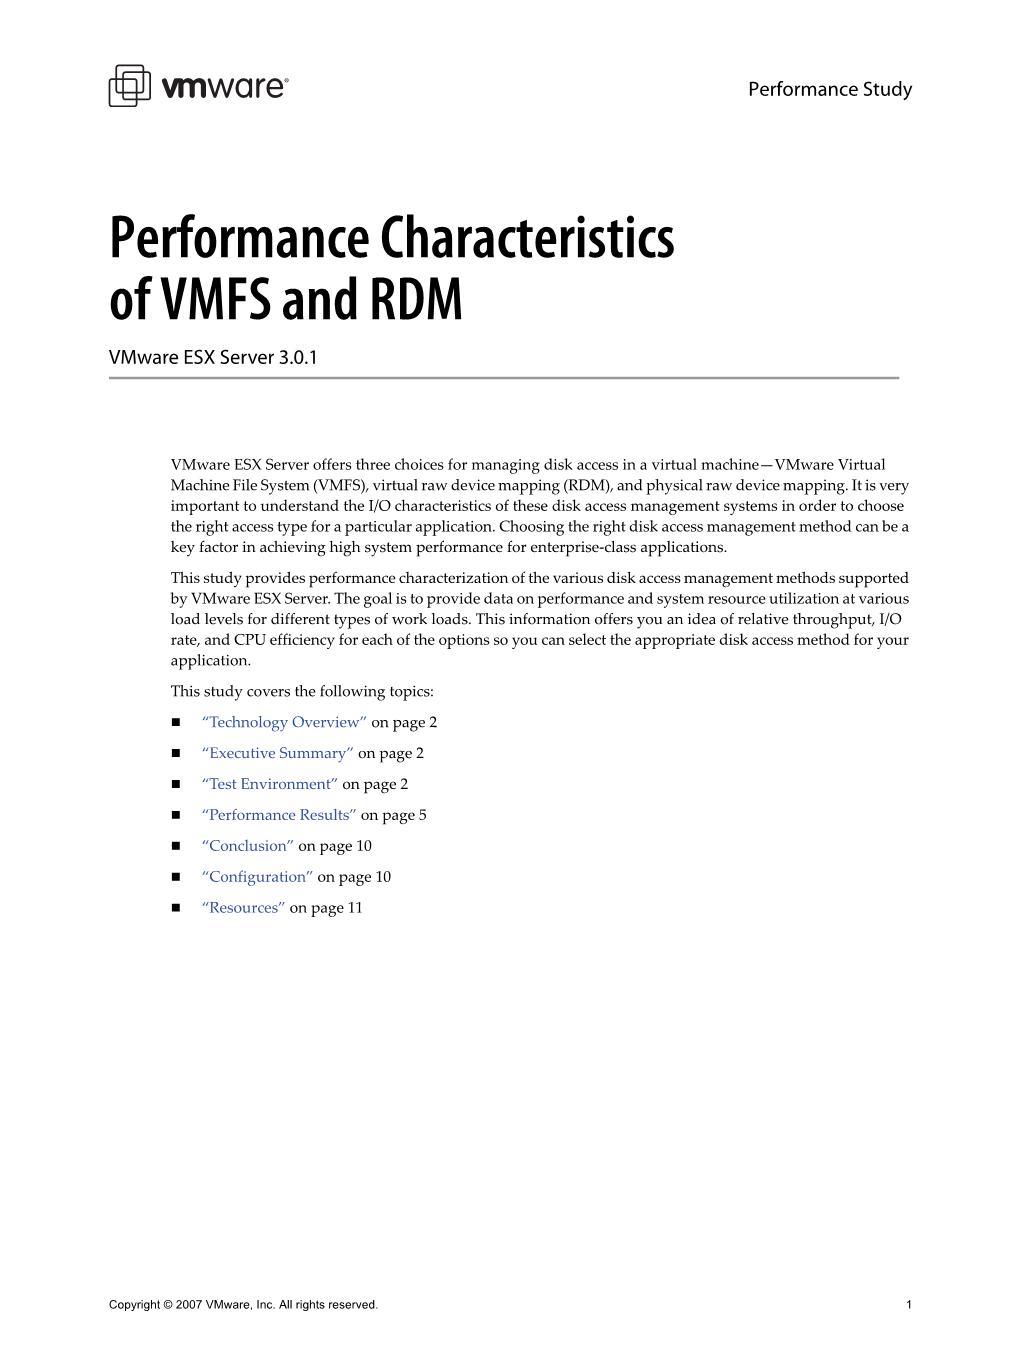 Performance Characteristics of VMFS and RDM Vmware ESX Server 3.0.1